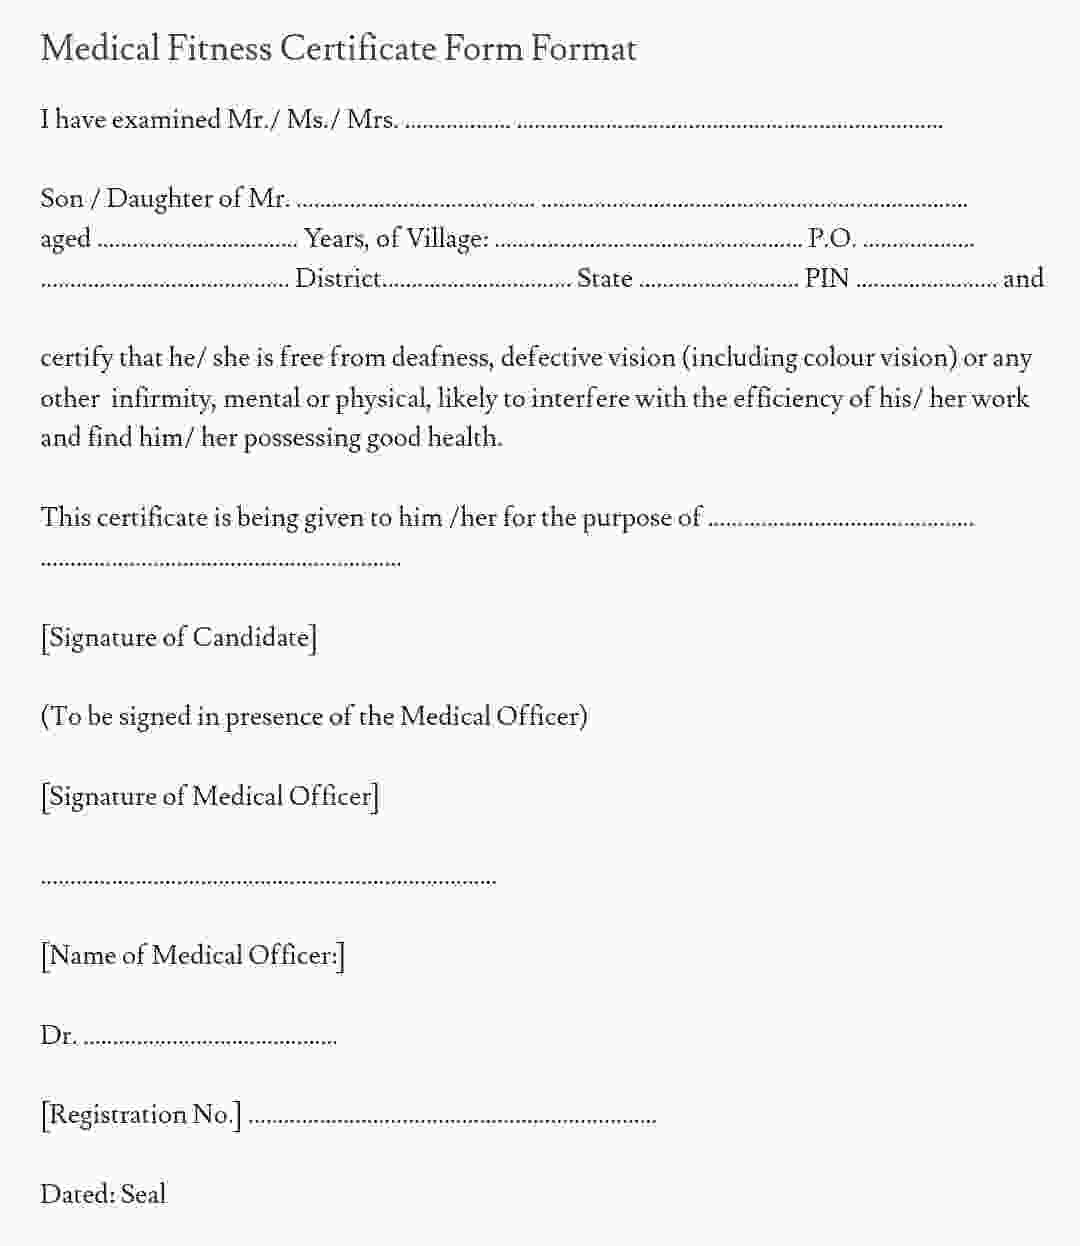 Medical Fitness Certificate Form Format PDF